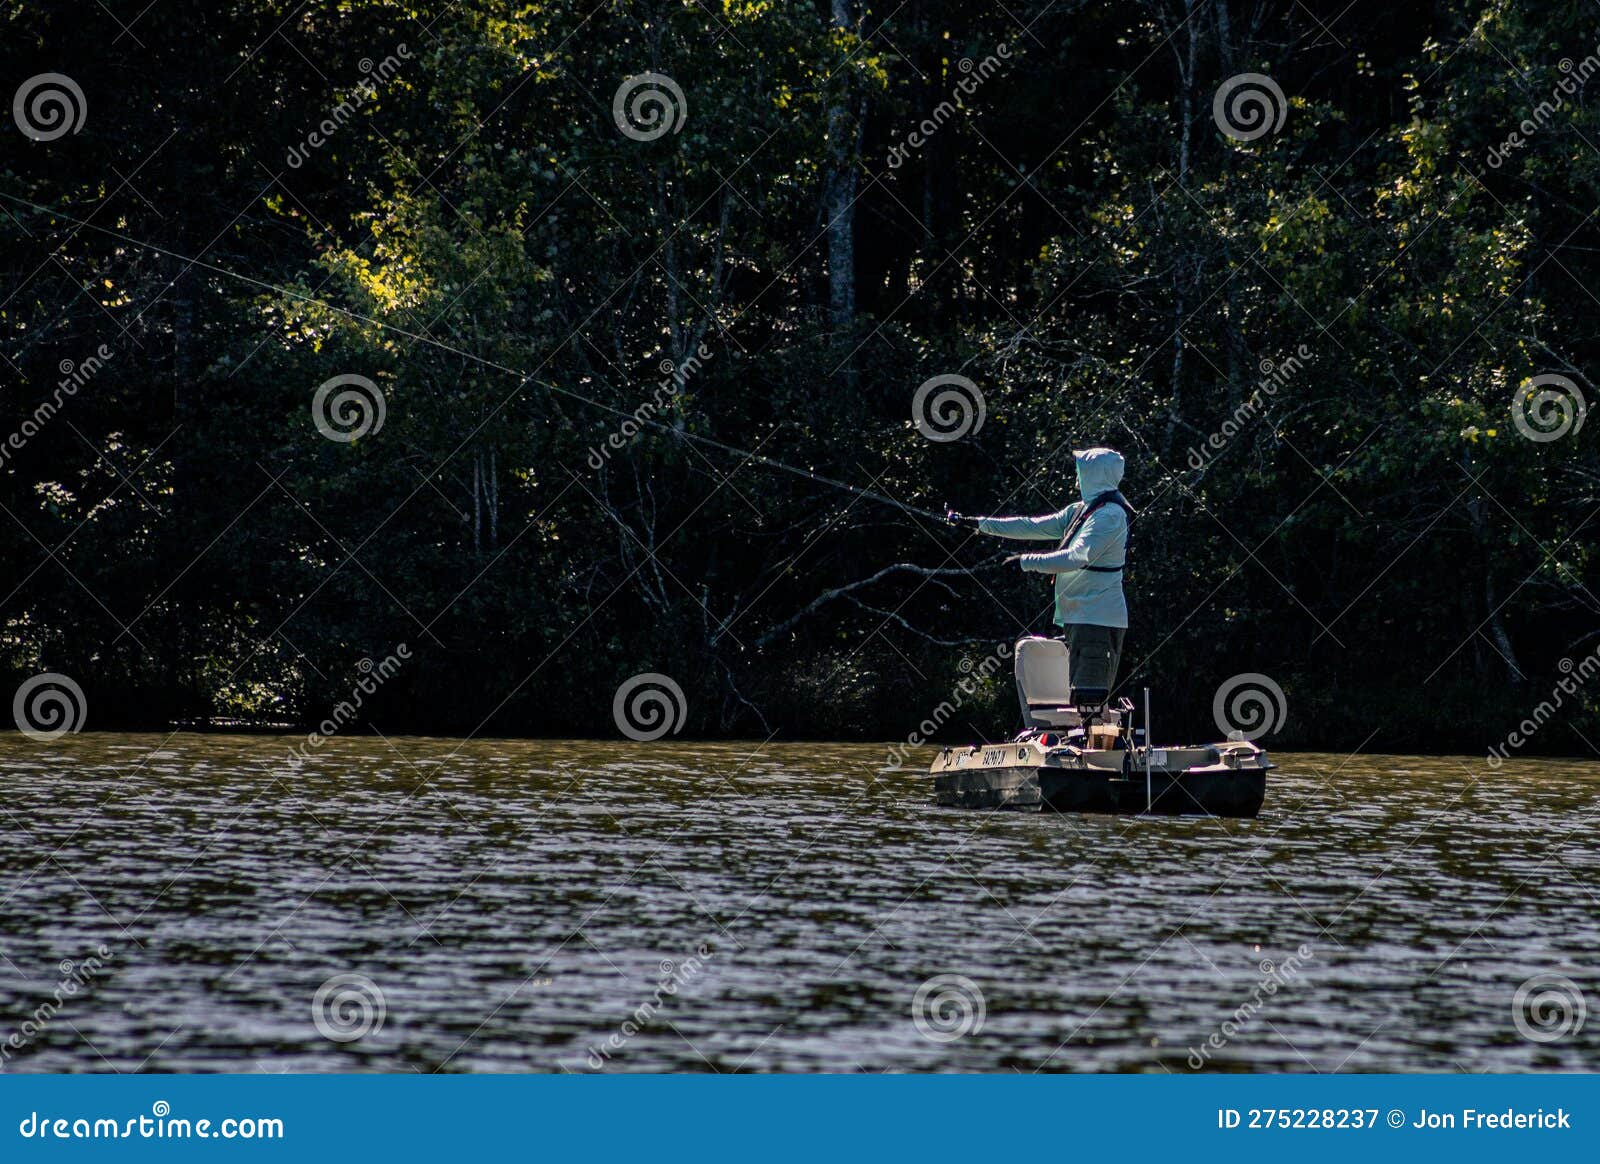 https://thumbs.dreamstime.com/z/woman-windbreaker-hoodie-fishing-small-single-person-boat-lake-casting-fishing-pole-person-fishing-pole-small-275228237.jpg